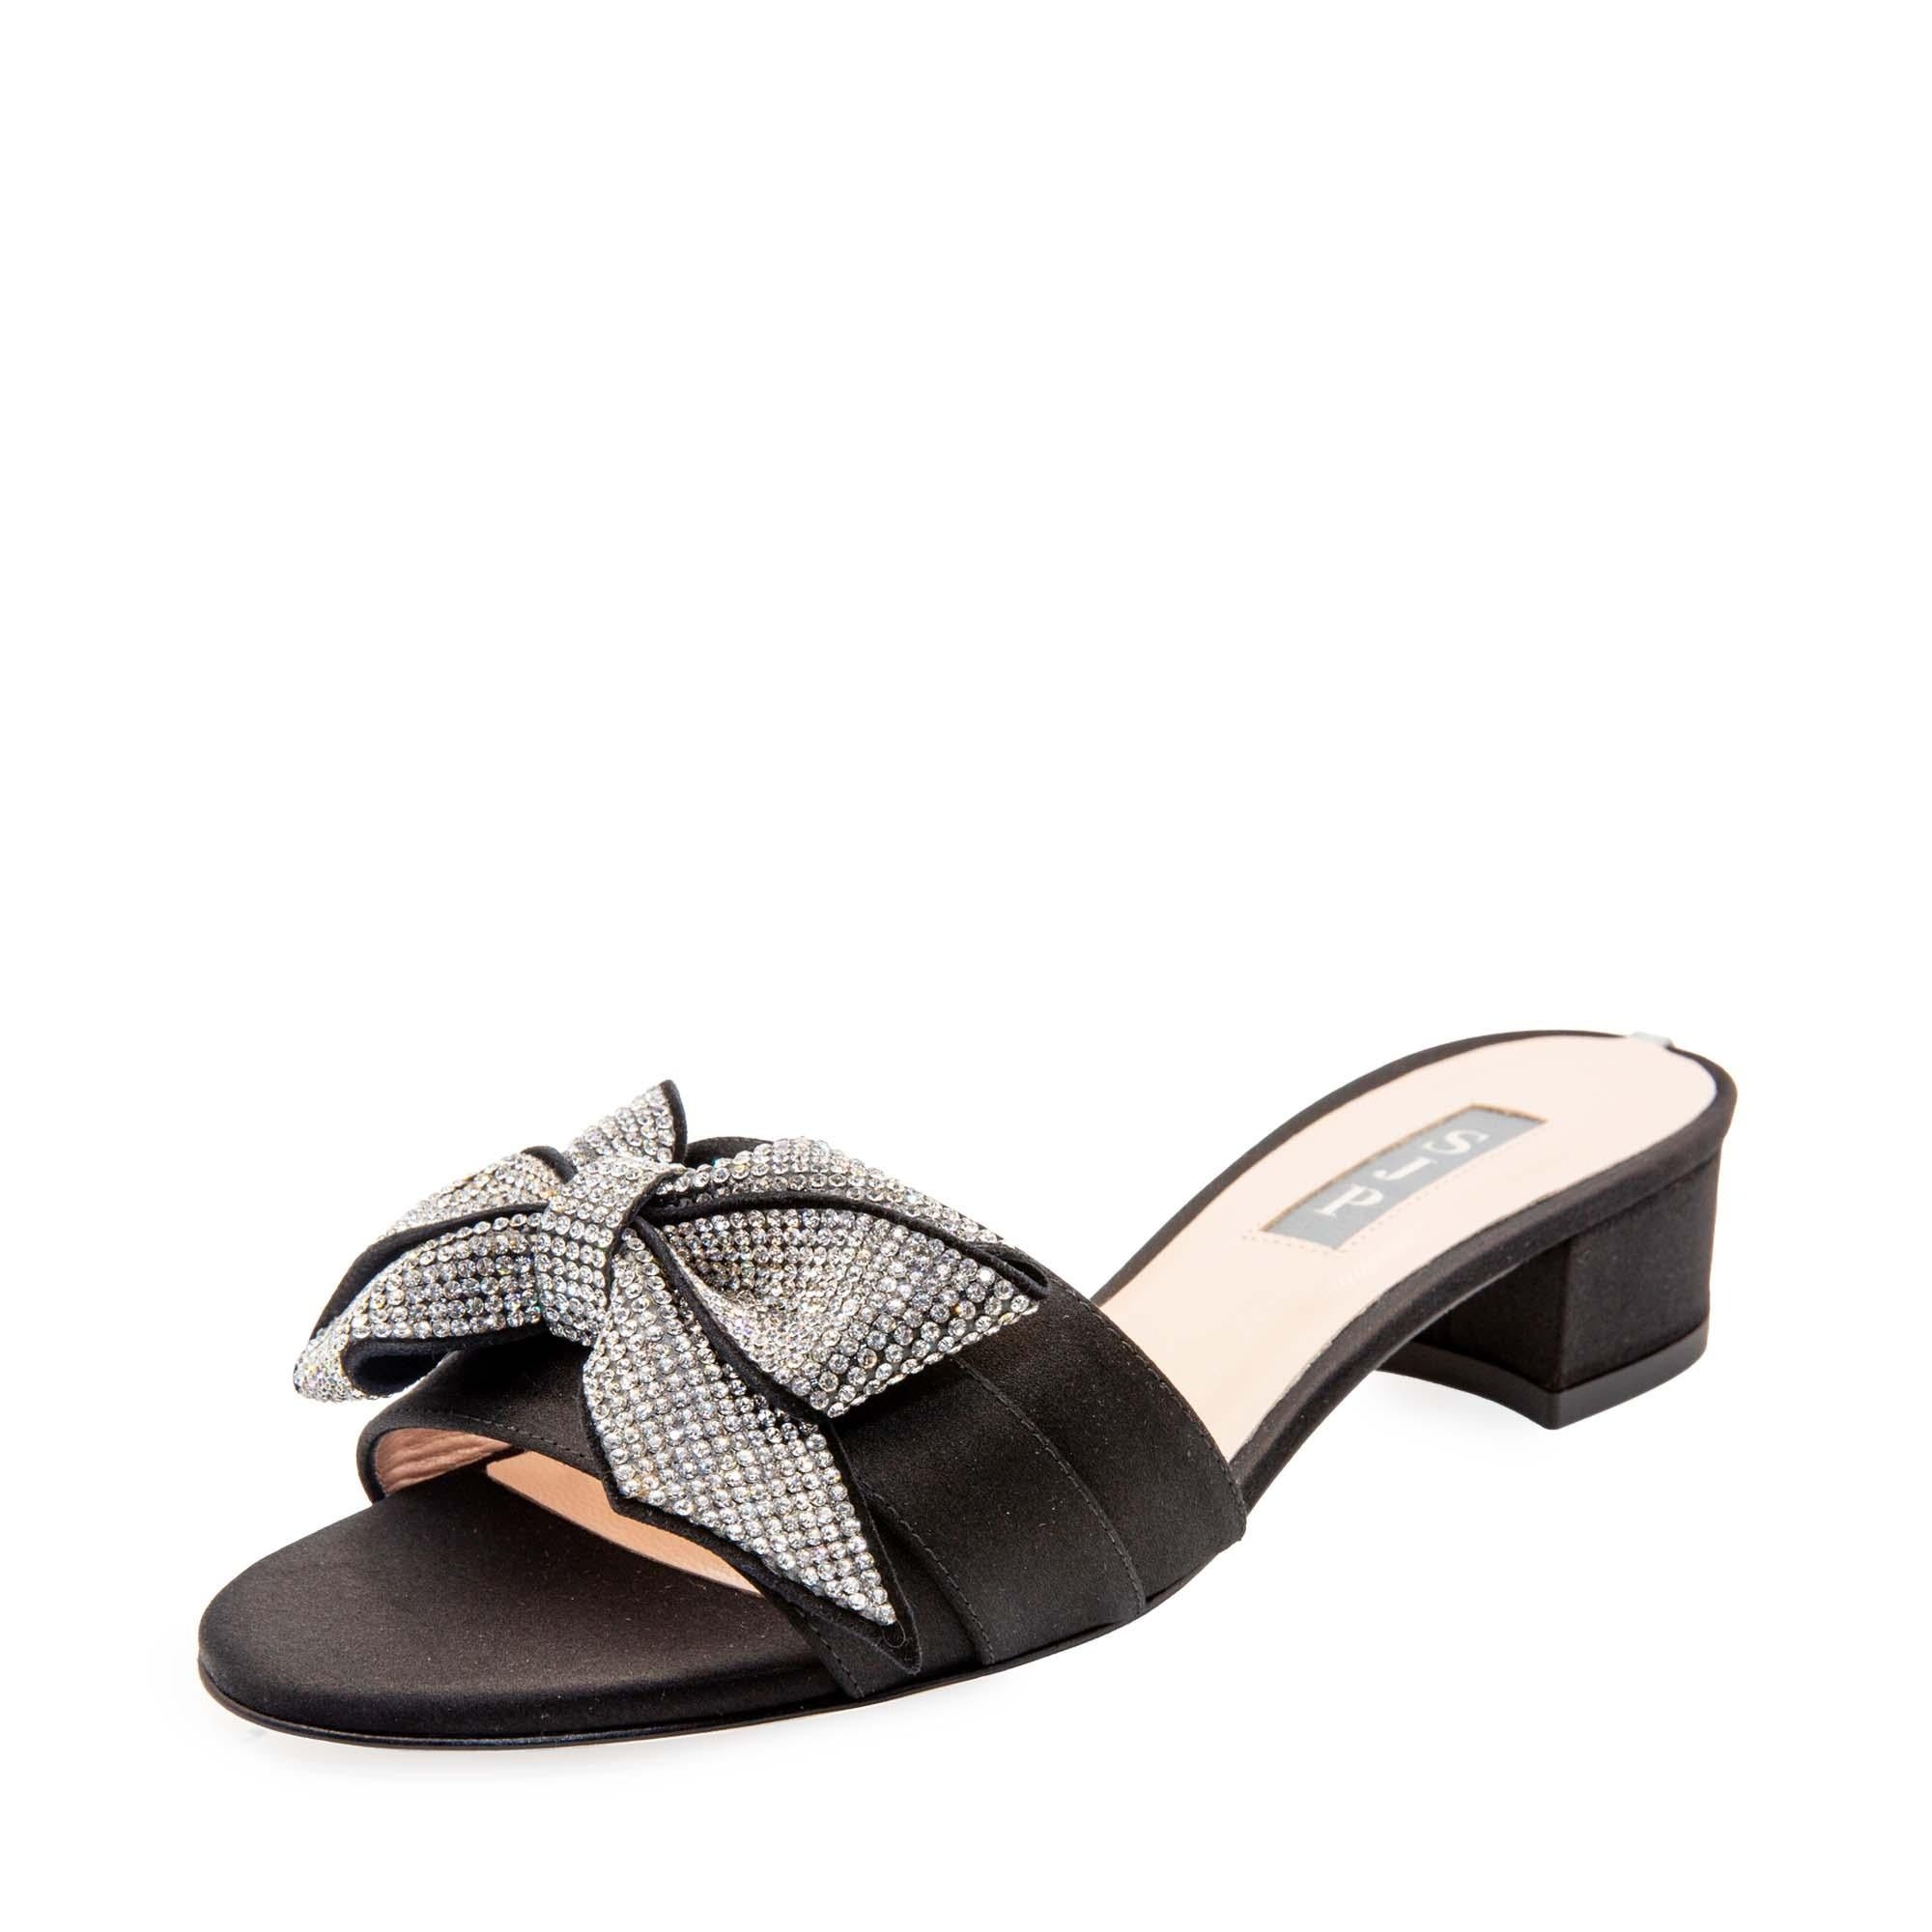 Shop SJP by Sarah Jessica Parker Black color Sandals for Women Online ...